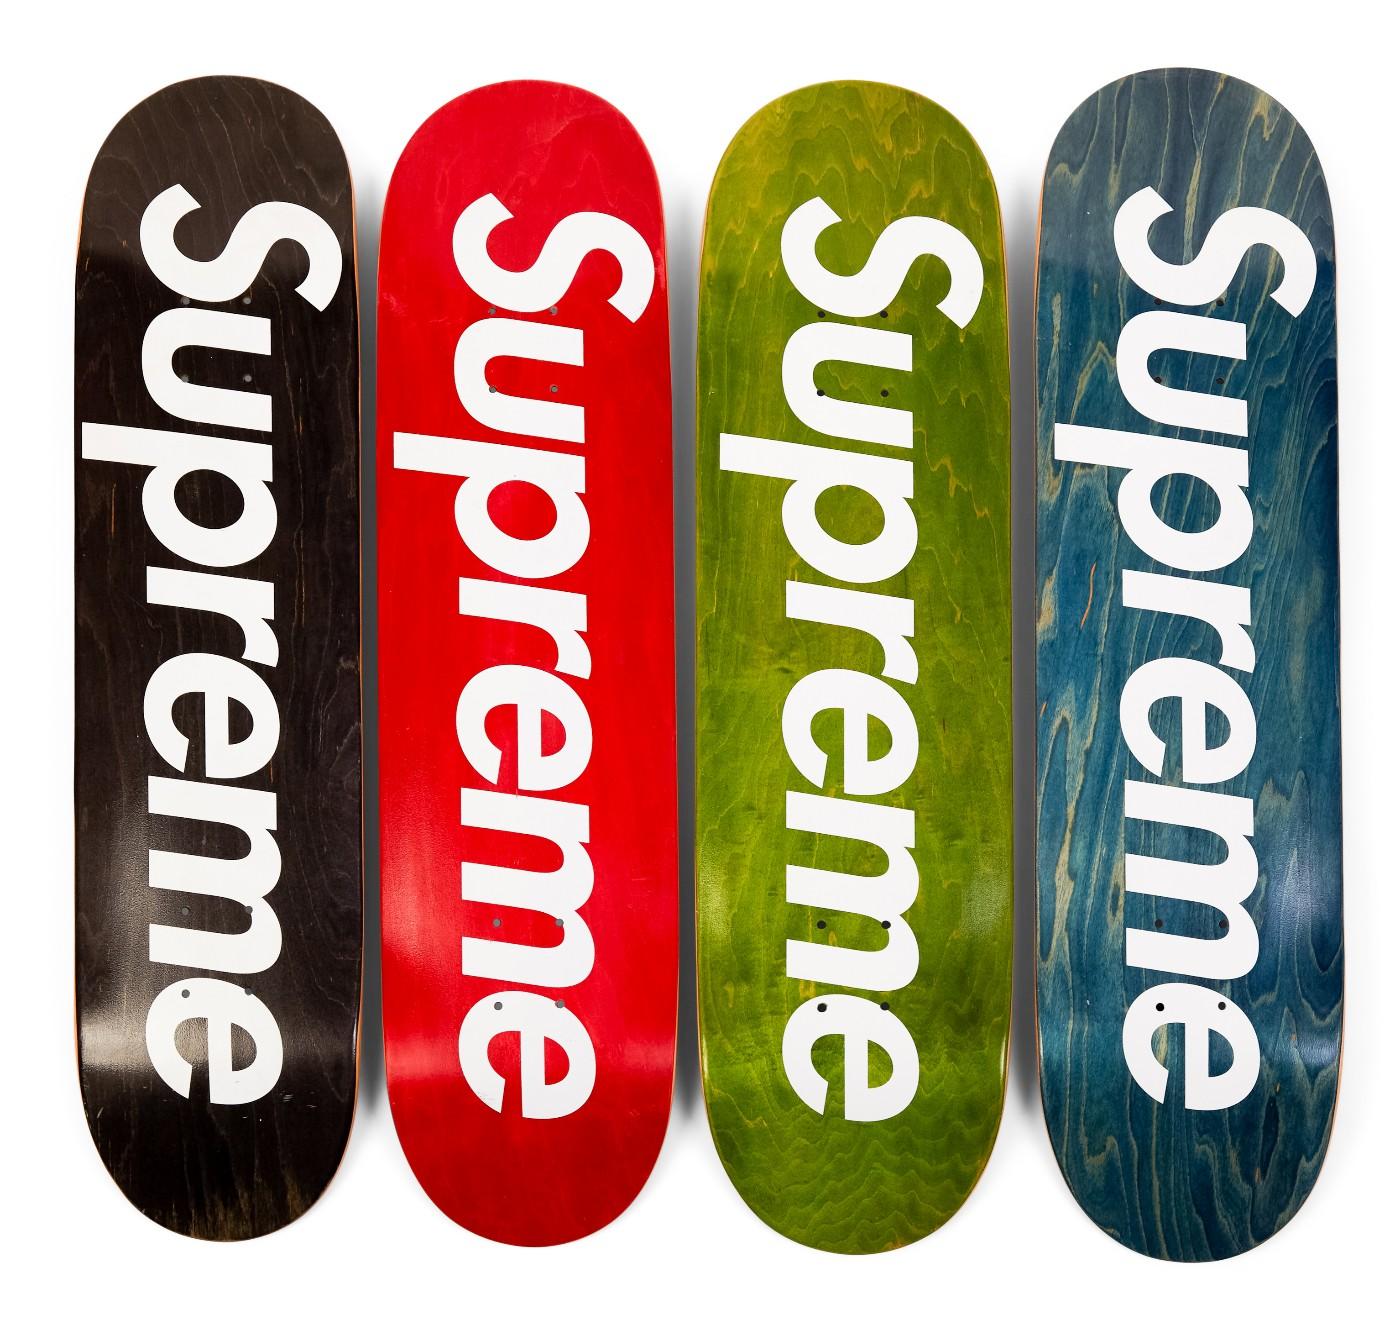 Buy Supreme x Louis Vuitton Boite Skateboard Trunk Monogram Red Online in  Australia